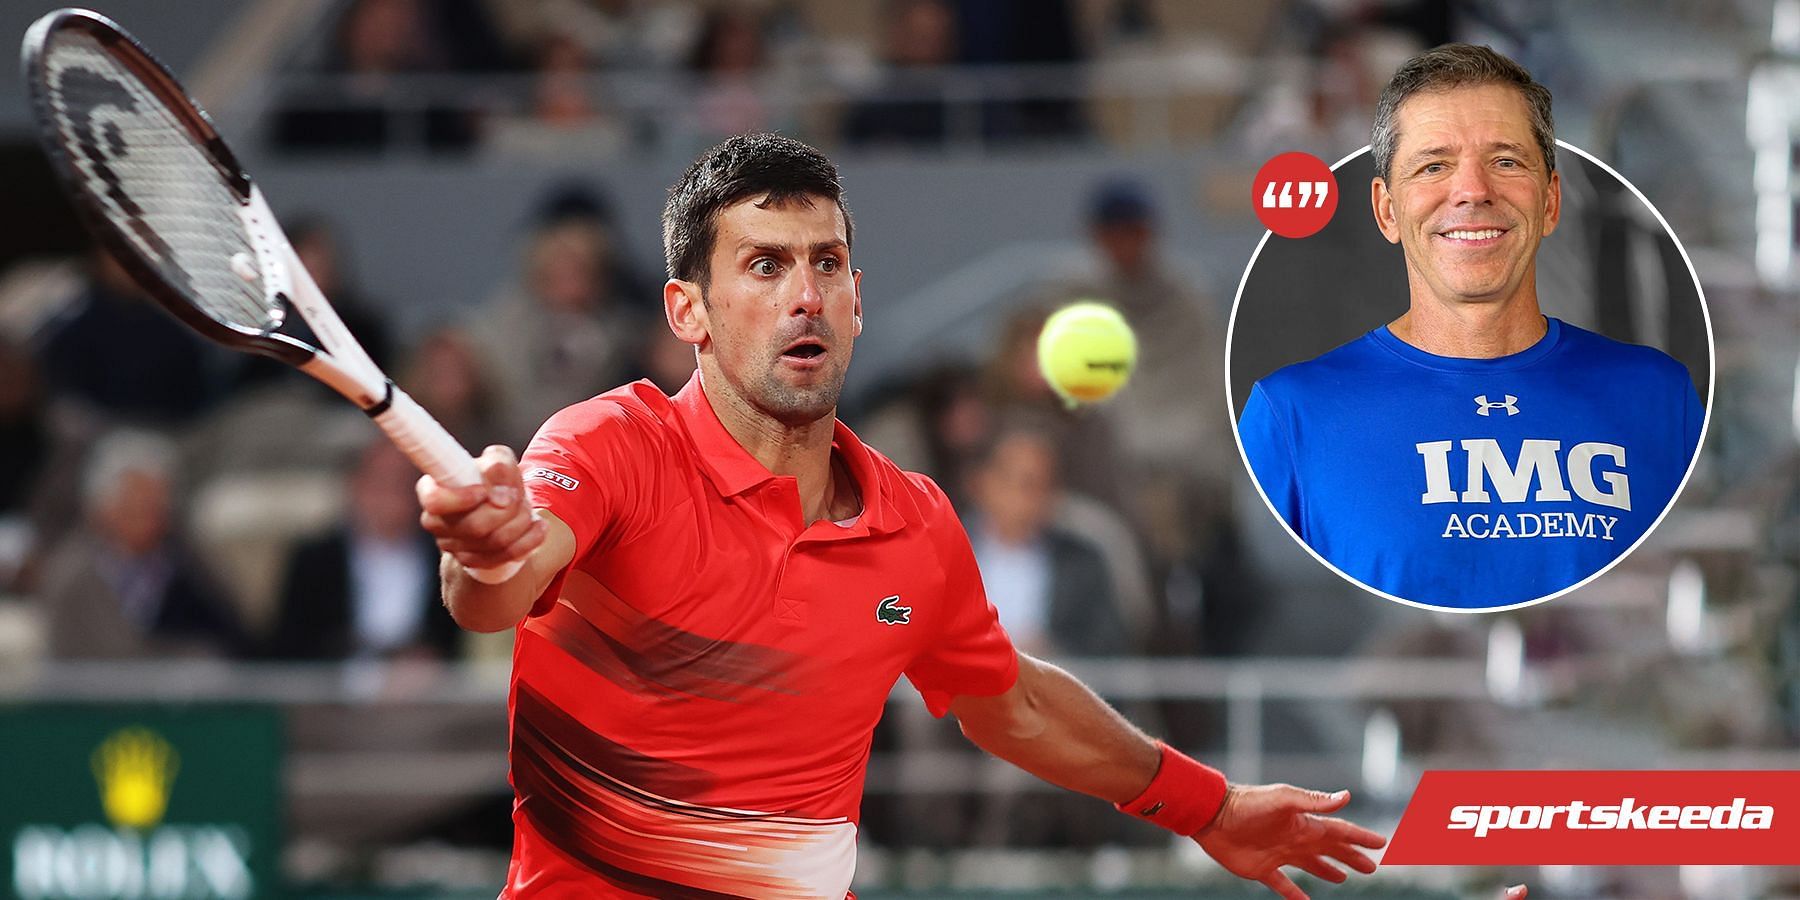 Jimmy Arias feels Novak Djokovic is cracking under the pressure of making history